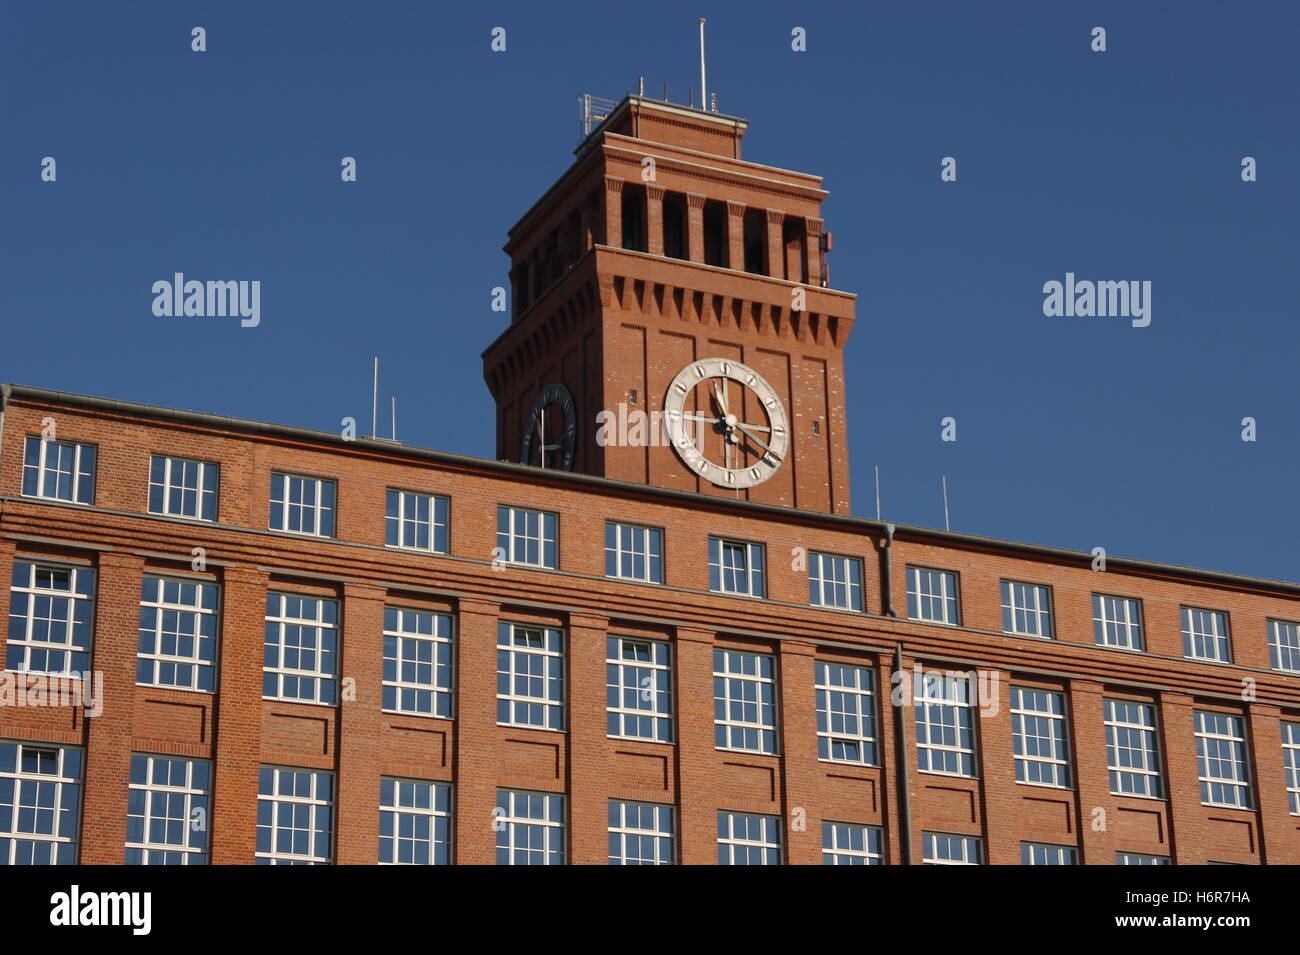 tower industry siemens berlin clock-tower tower story industry siemens berlin history clock-tower brick siemensstadt Stock Photo